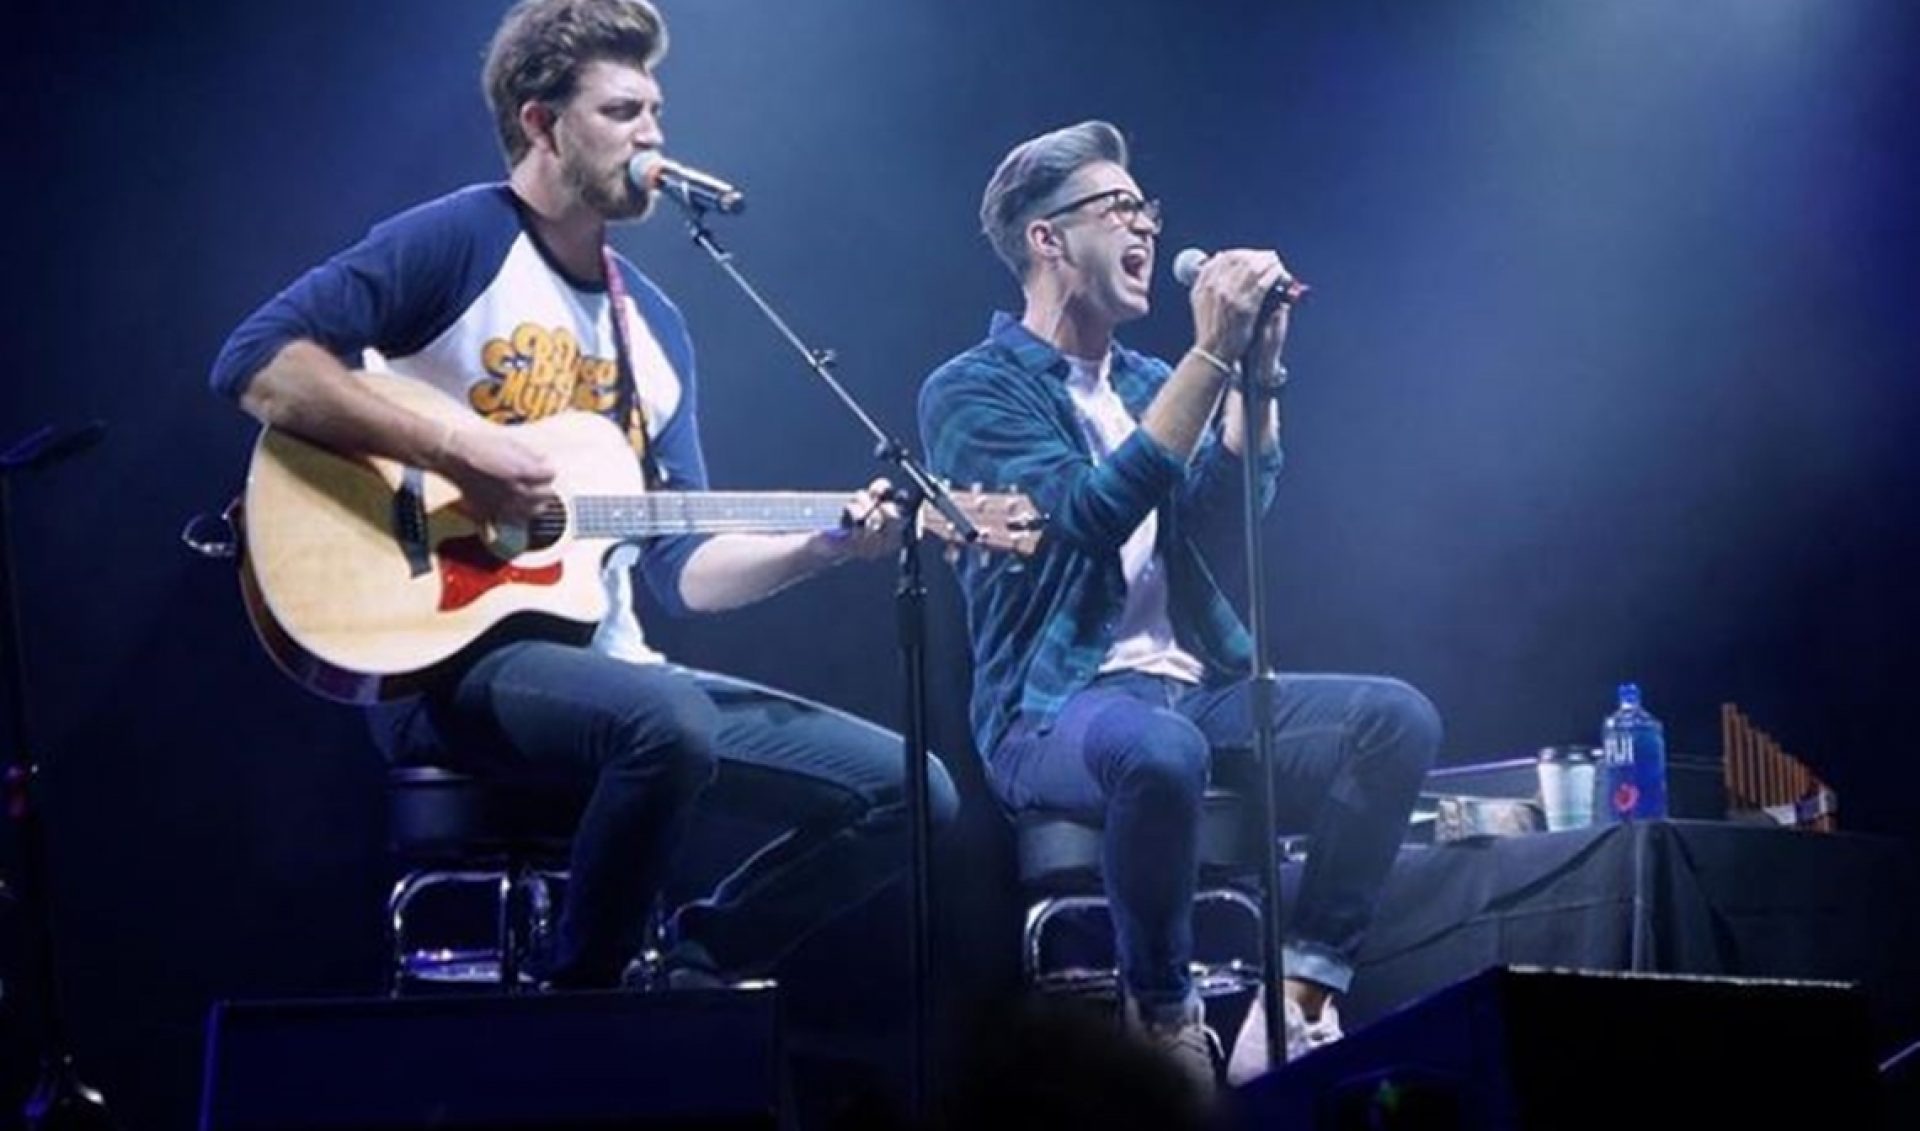 Rhett & Link To Kick Off Inaugural VidCon London With Live Concert